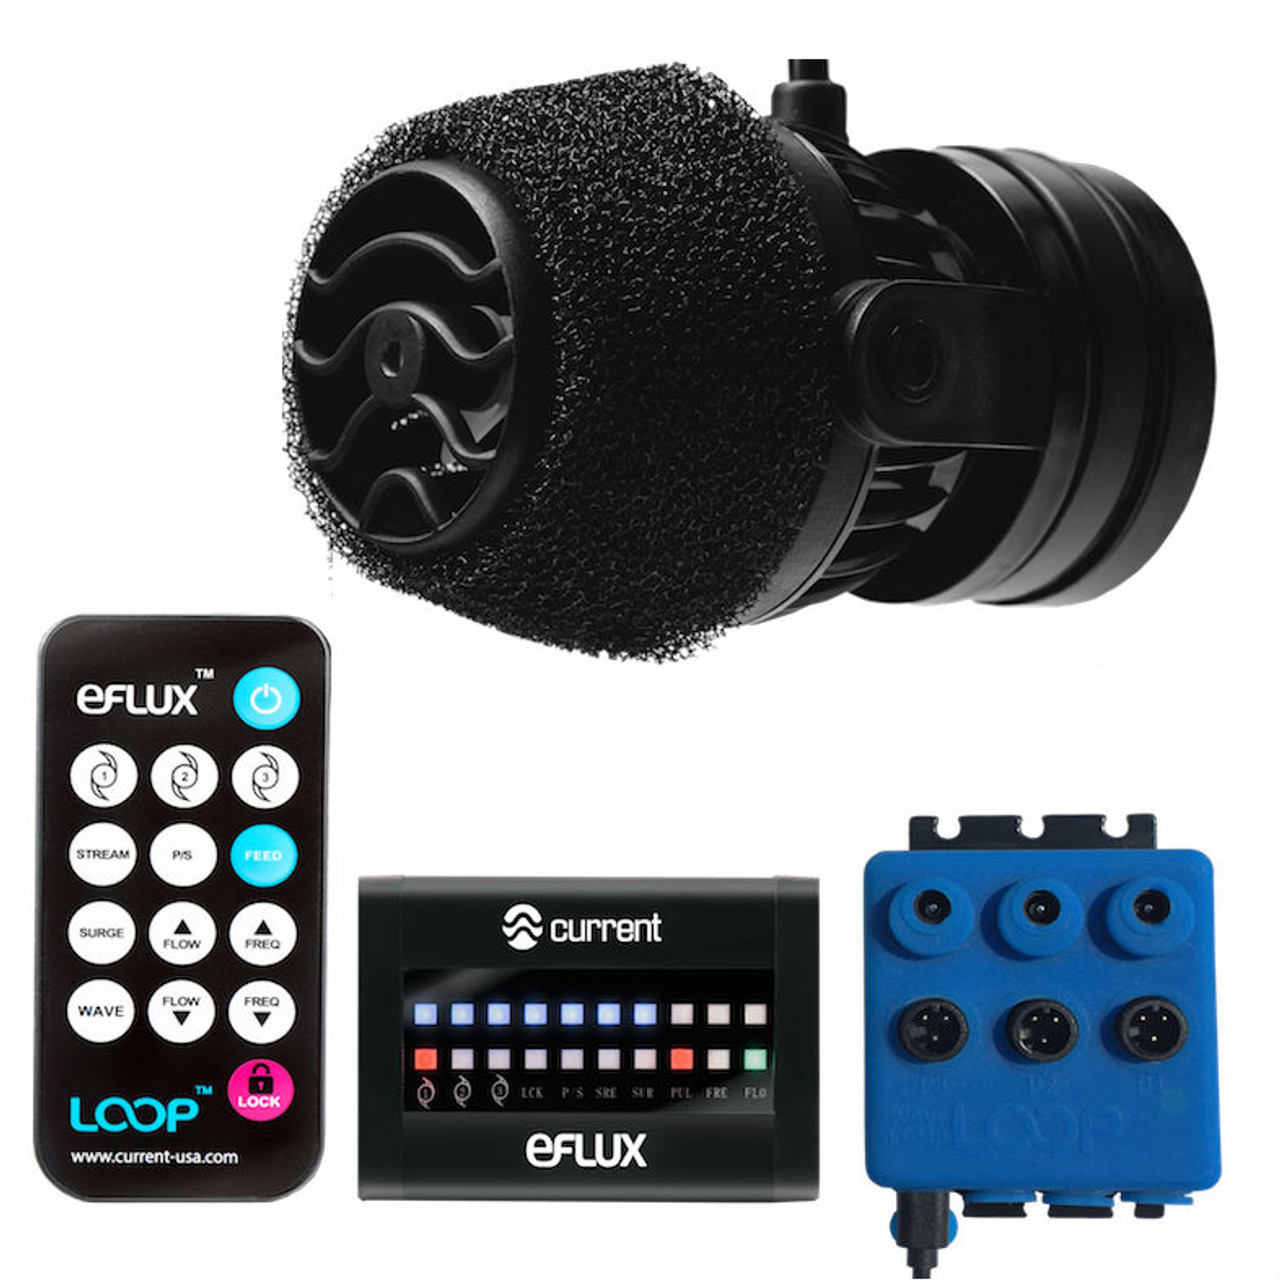 Current USA eFlux Wave Pump Kit Loop Compatible - 2100 GPH